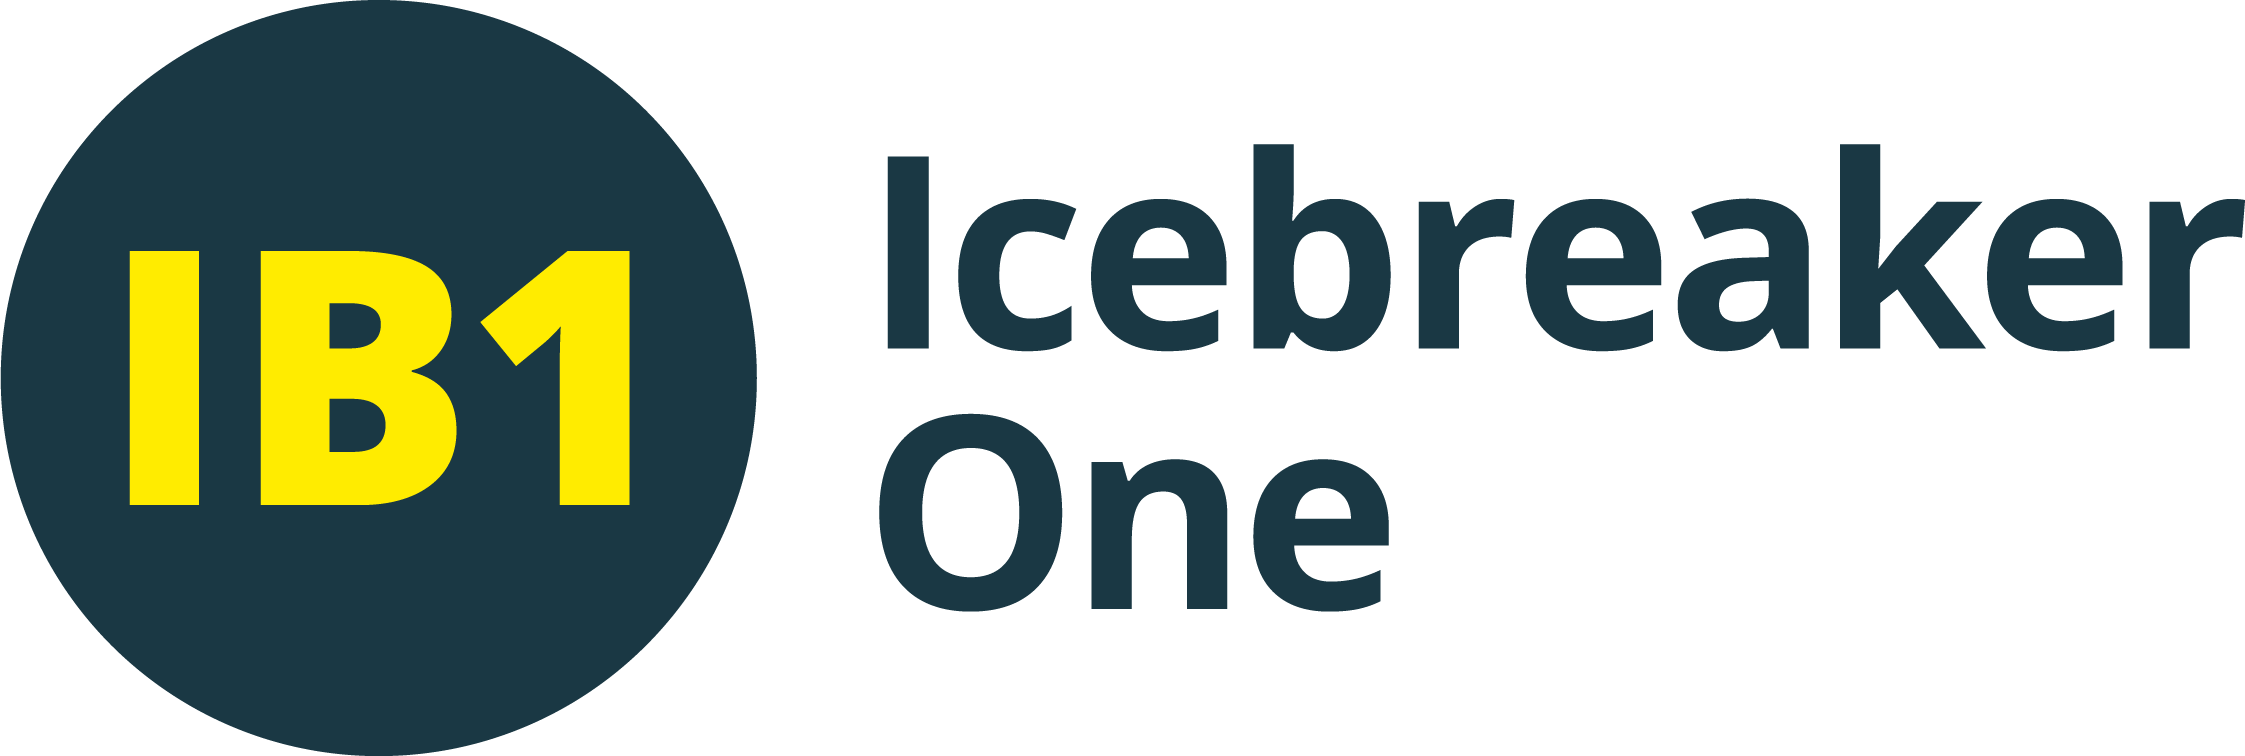 Icebreaker One logo